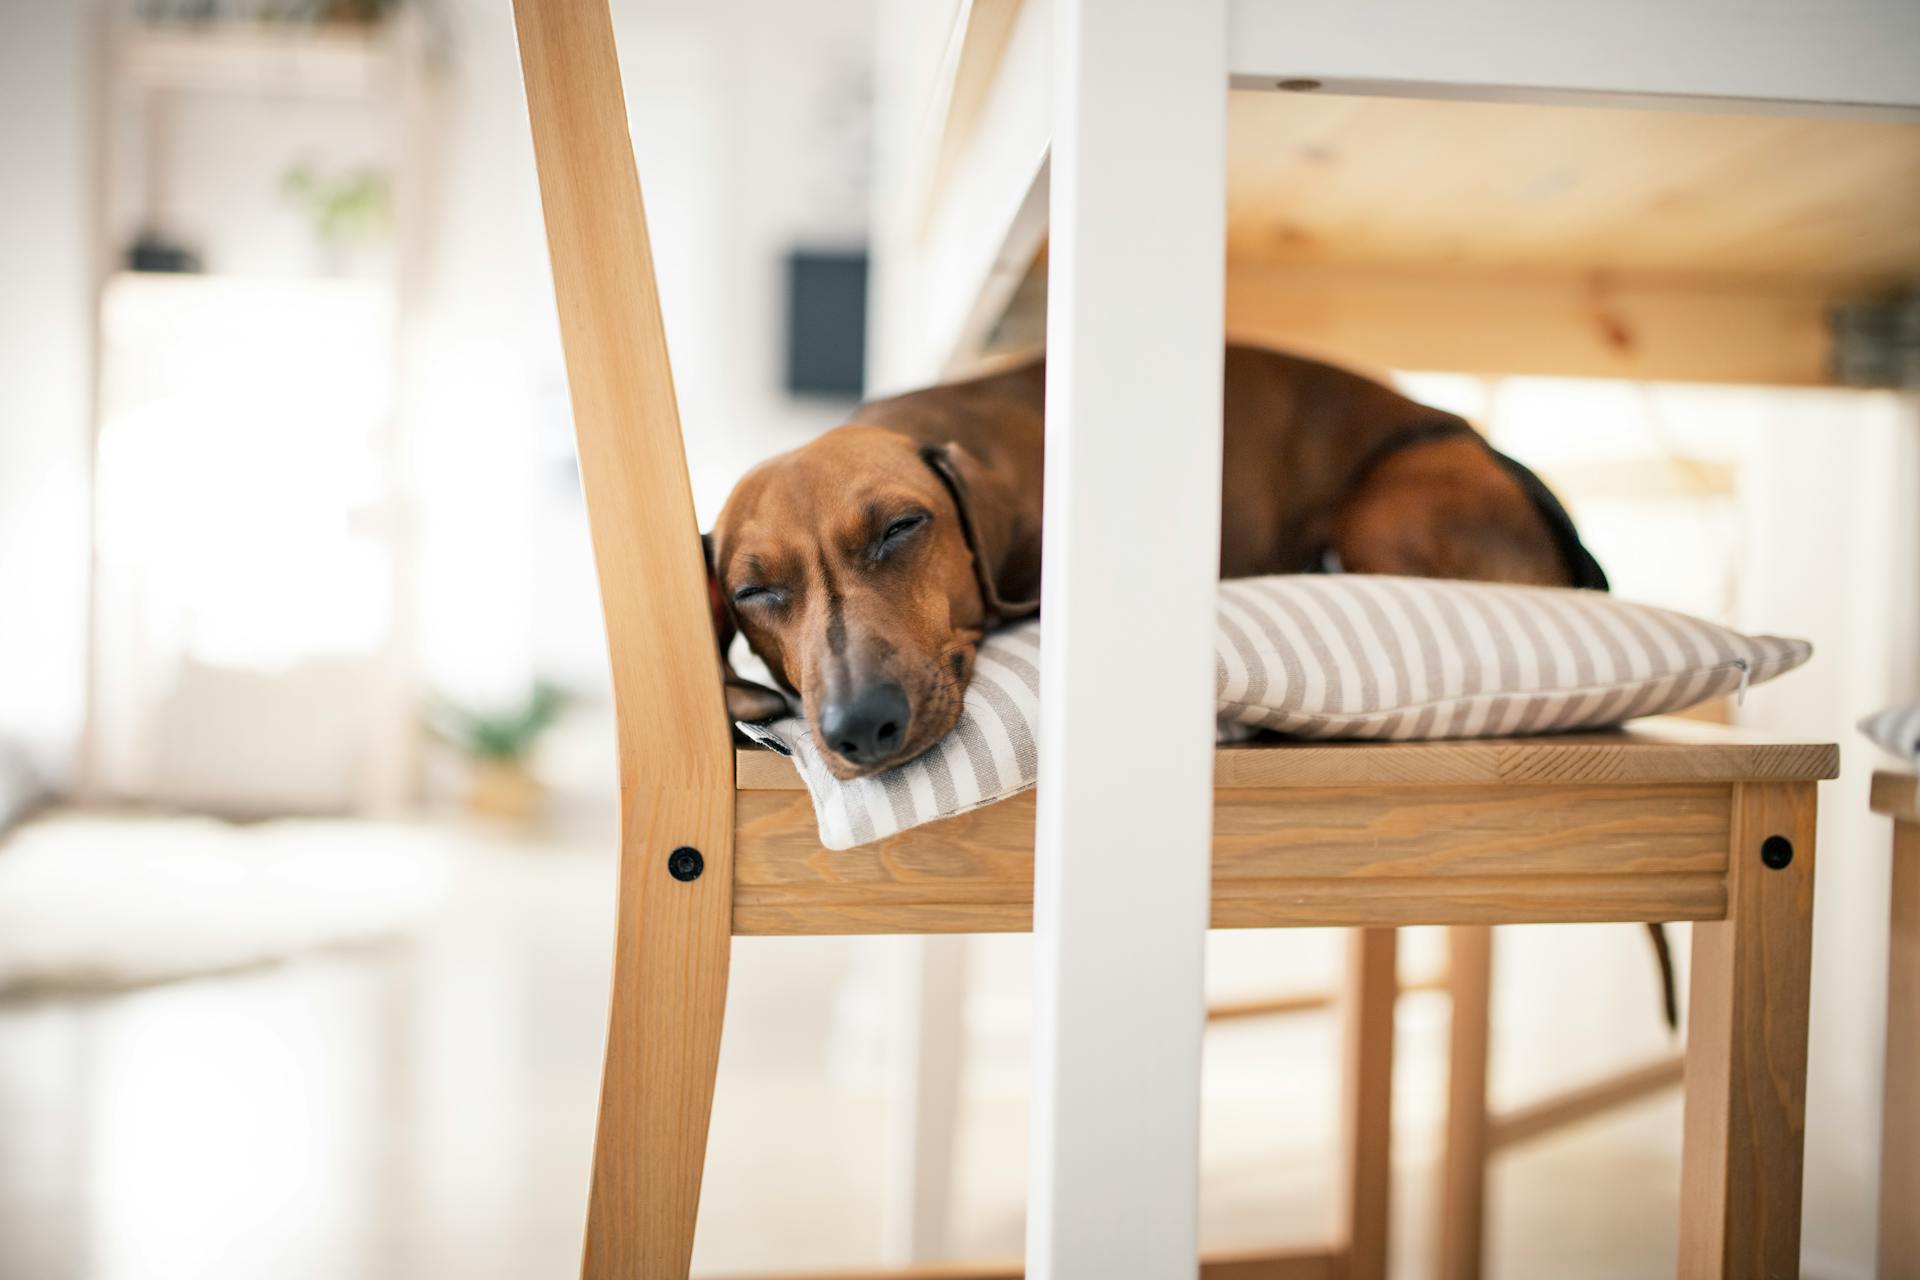 A Dachshund sleeping on a chair